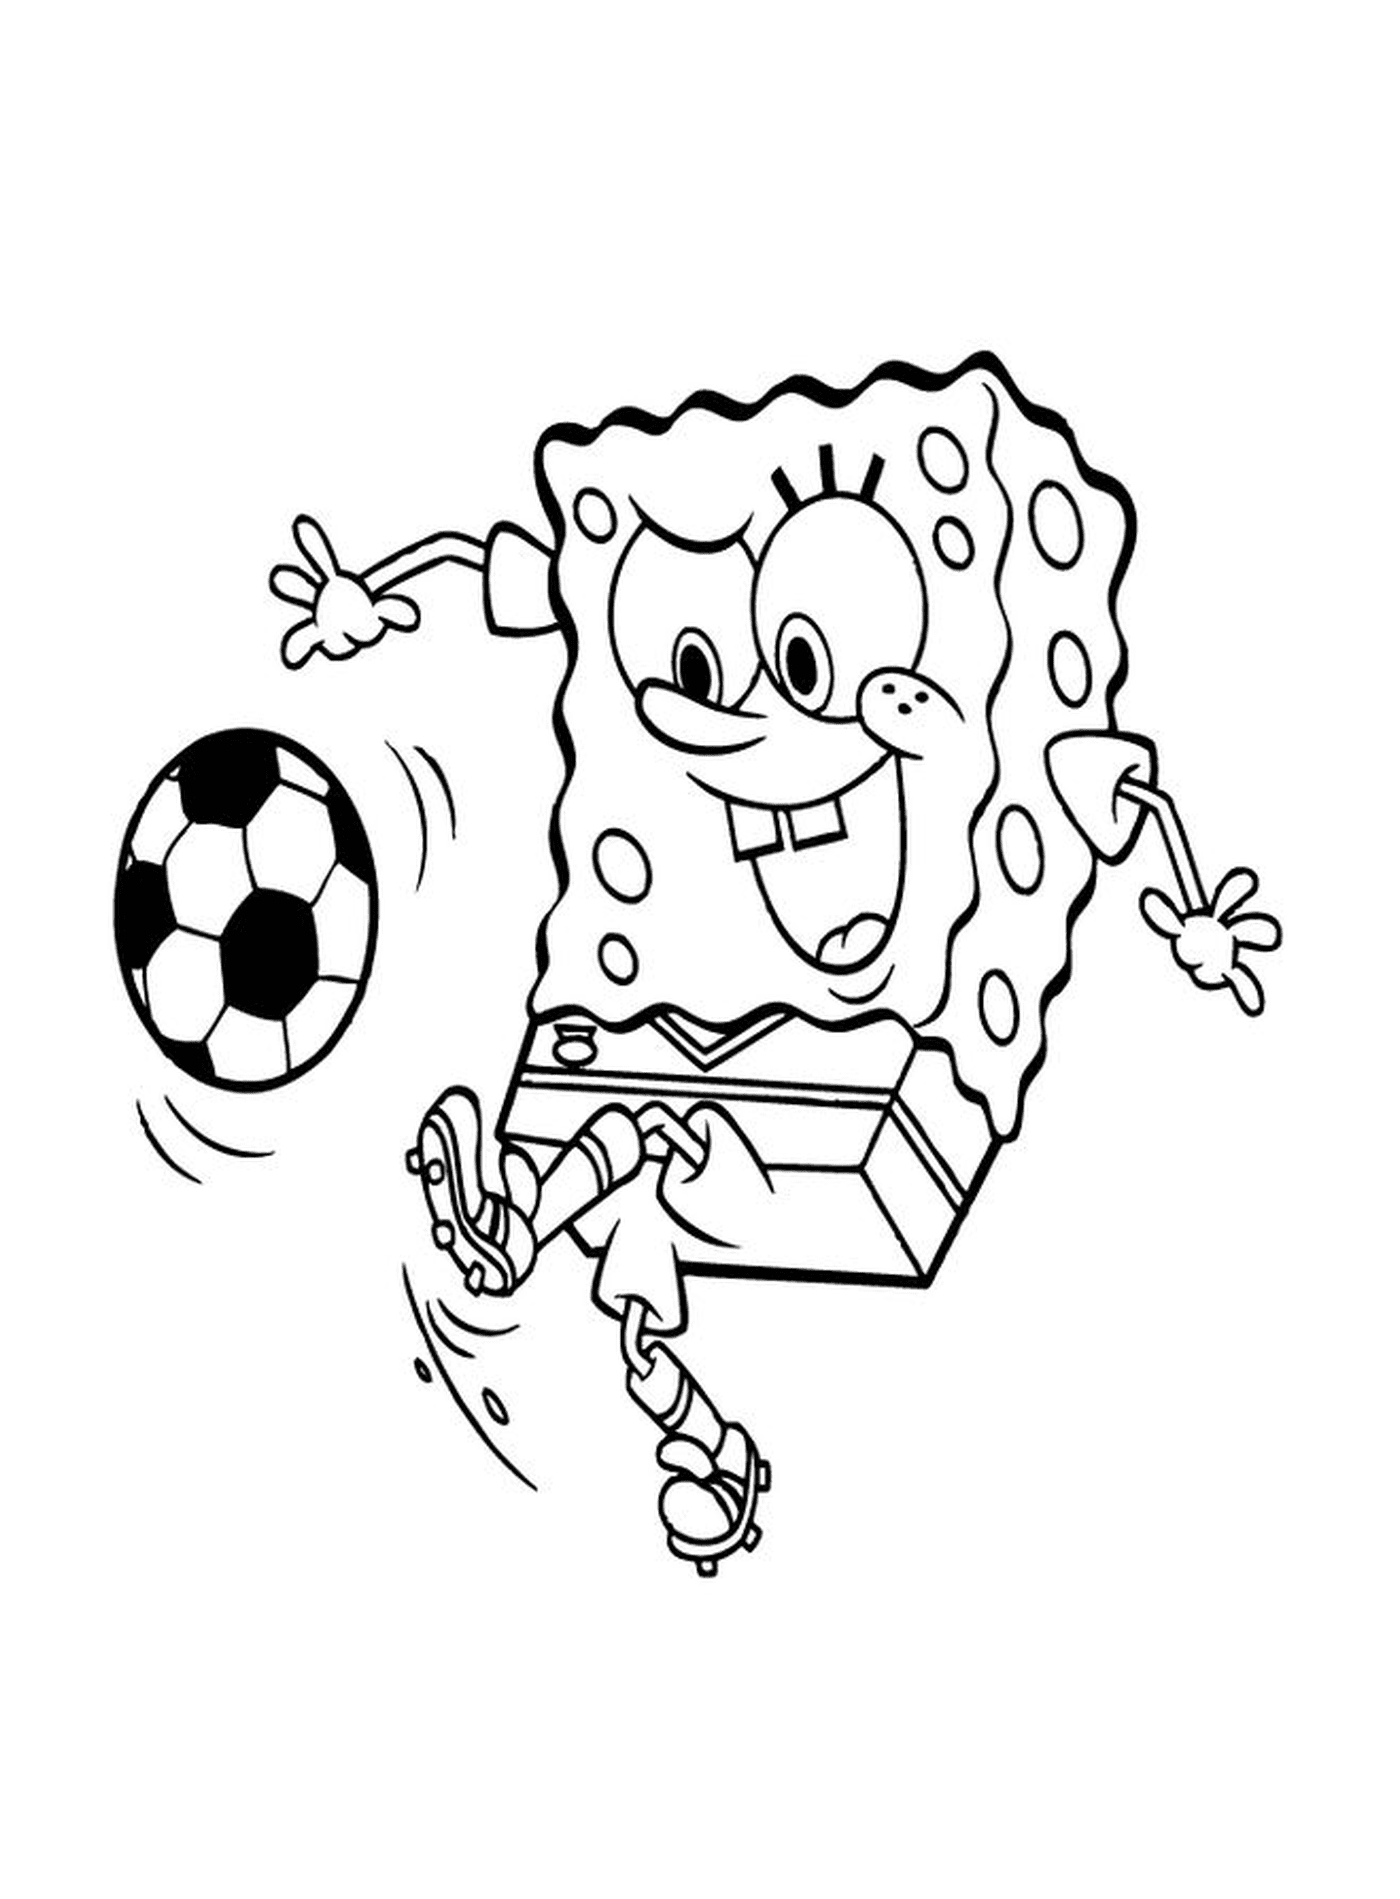  Spongebob playing soccer 